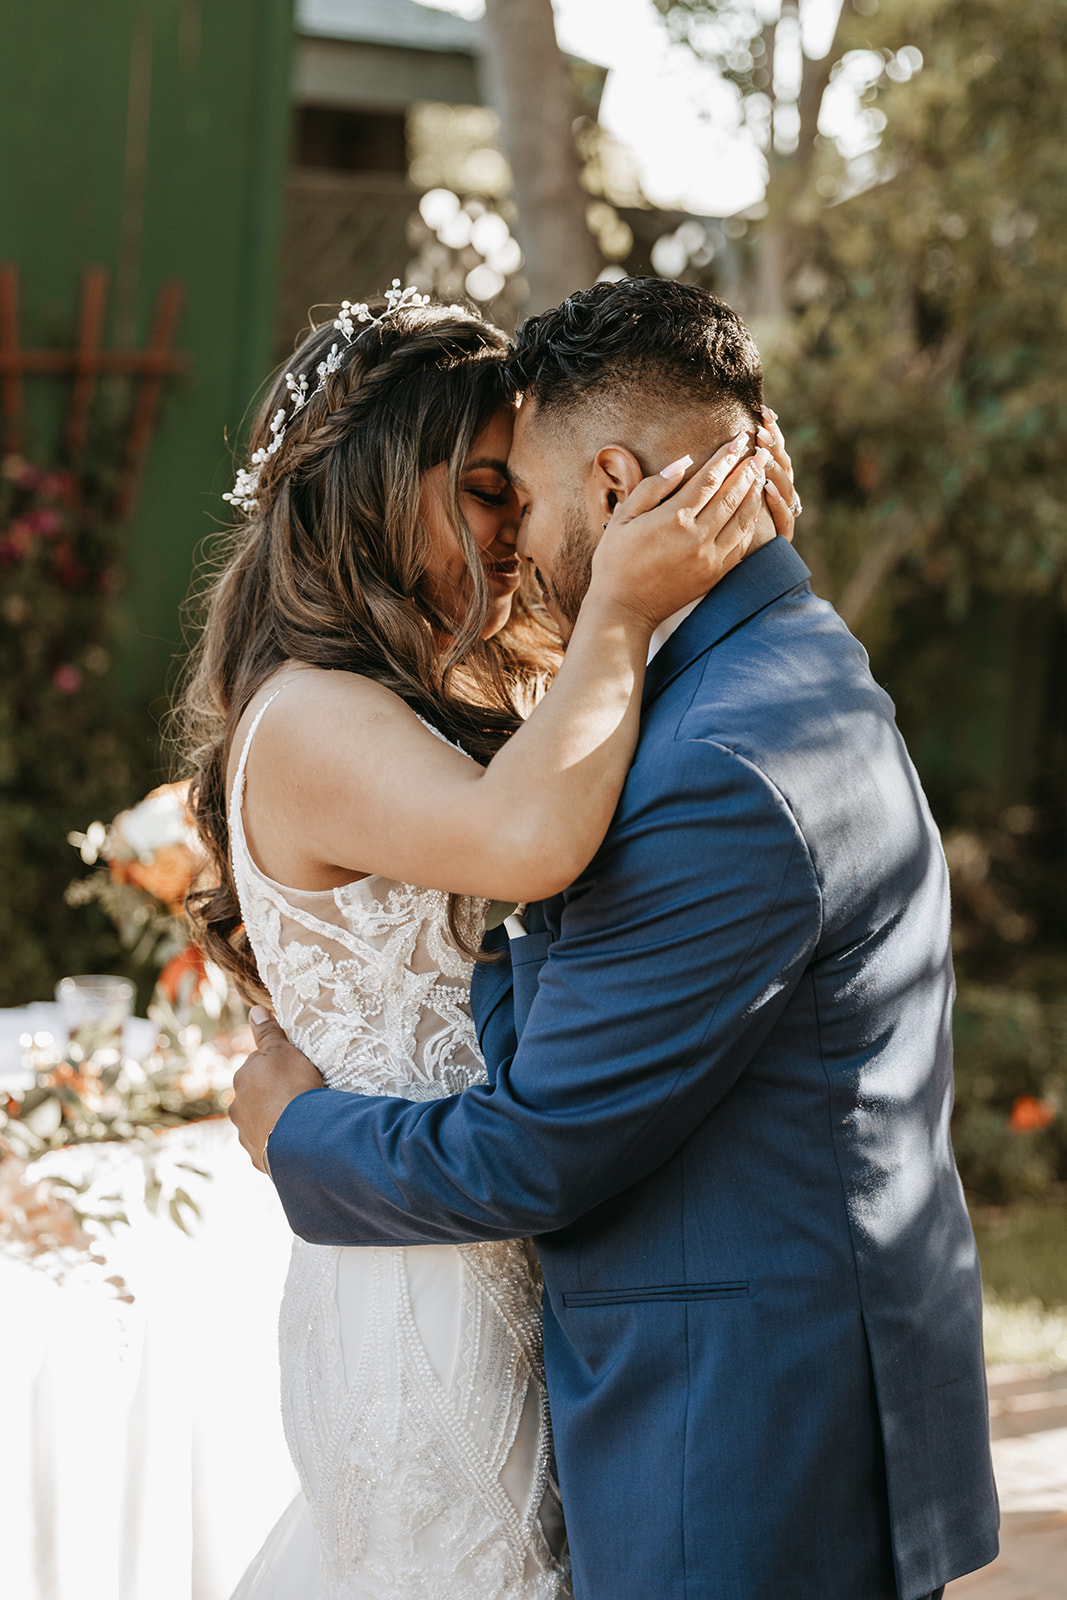 An Intimate Autumn Wedding at Kaleidoscope Inn | Juan & Miriam